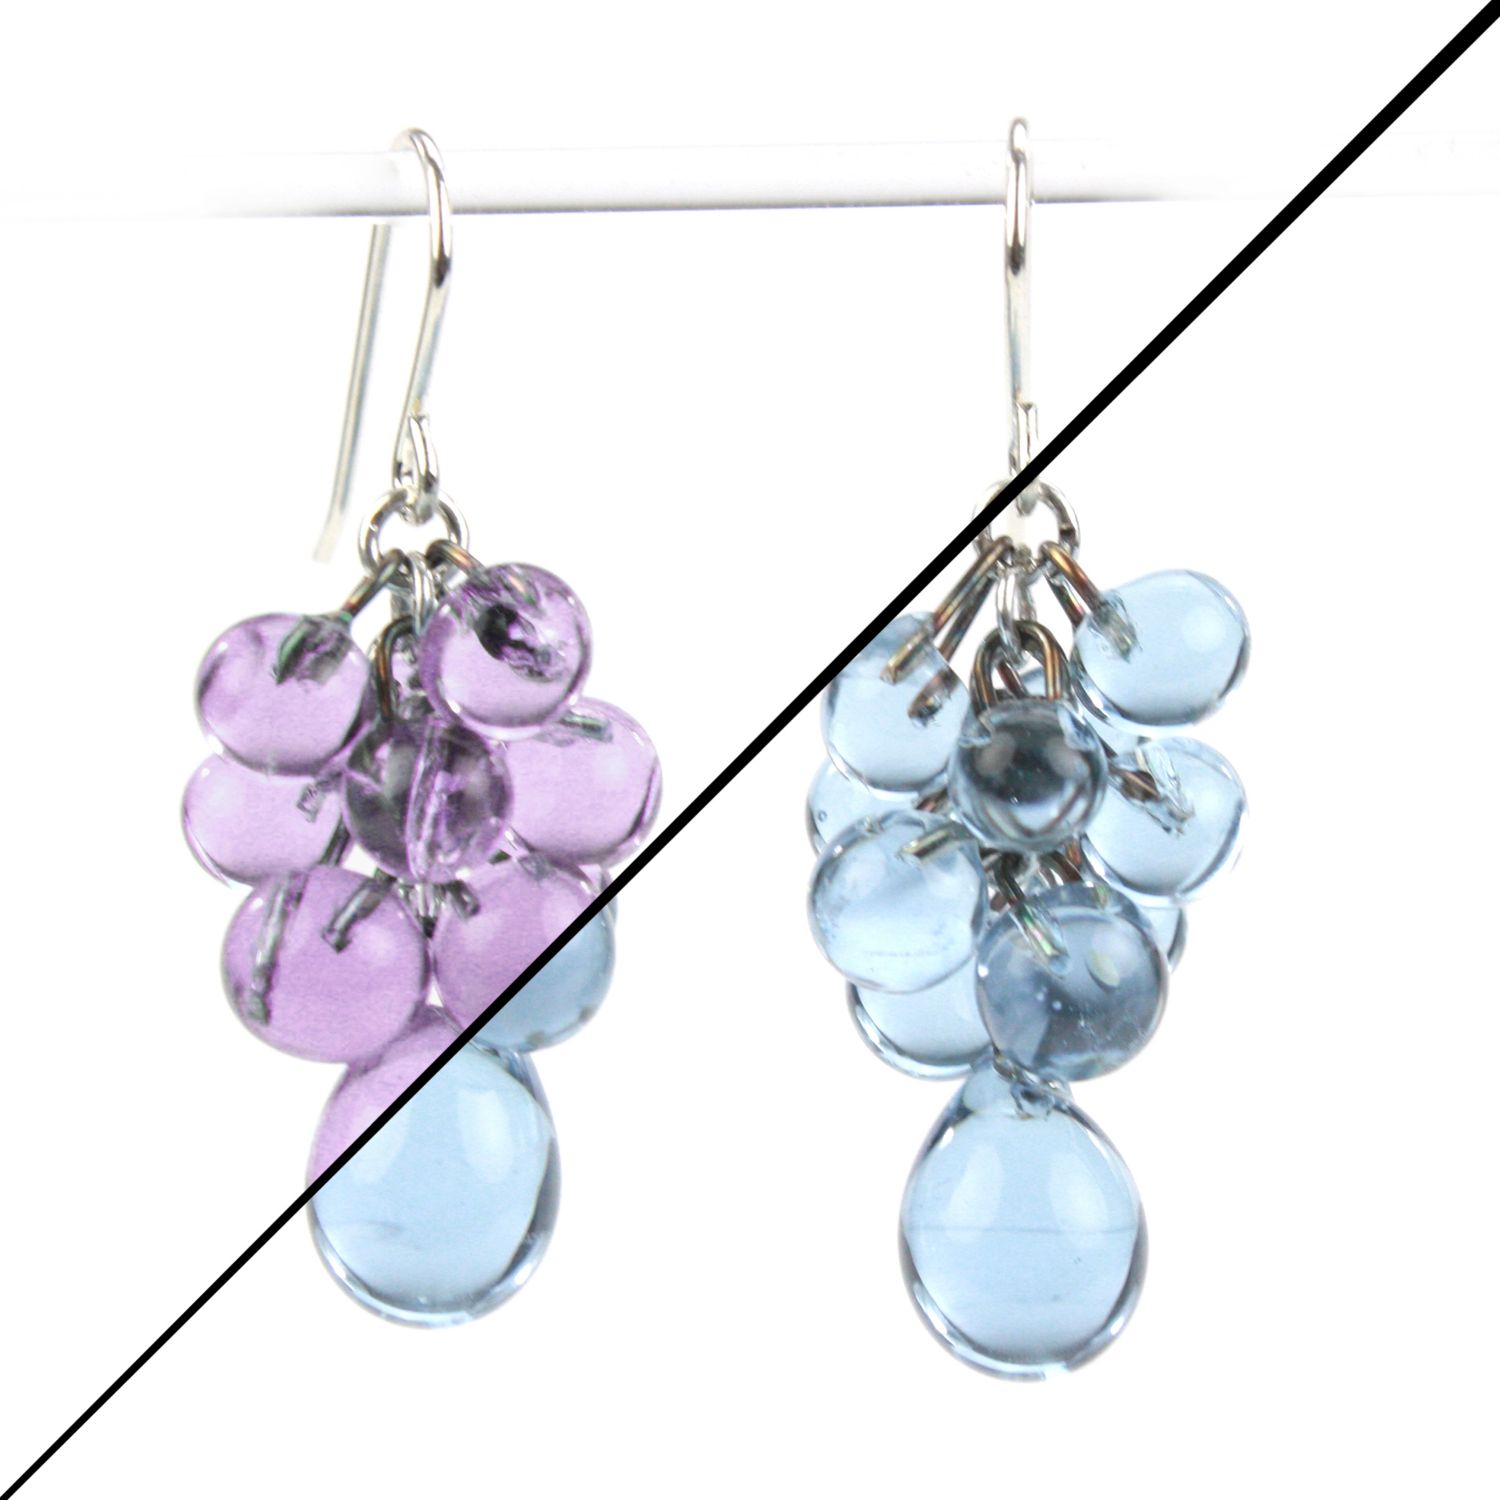 Alicia Niles: Chroma Earrings – Purple/Blue Product Image 2 of 2